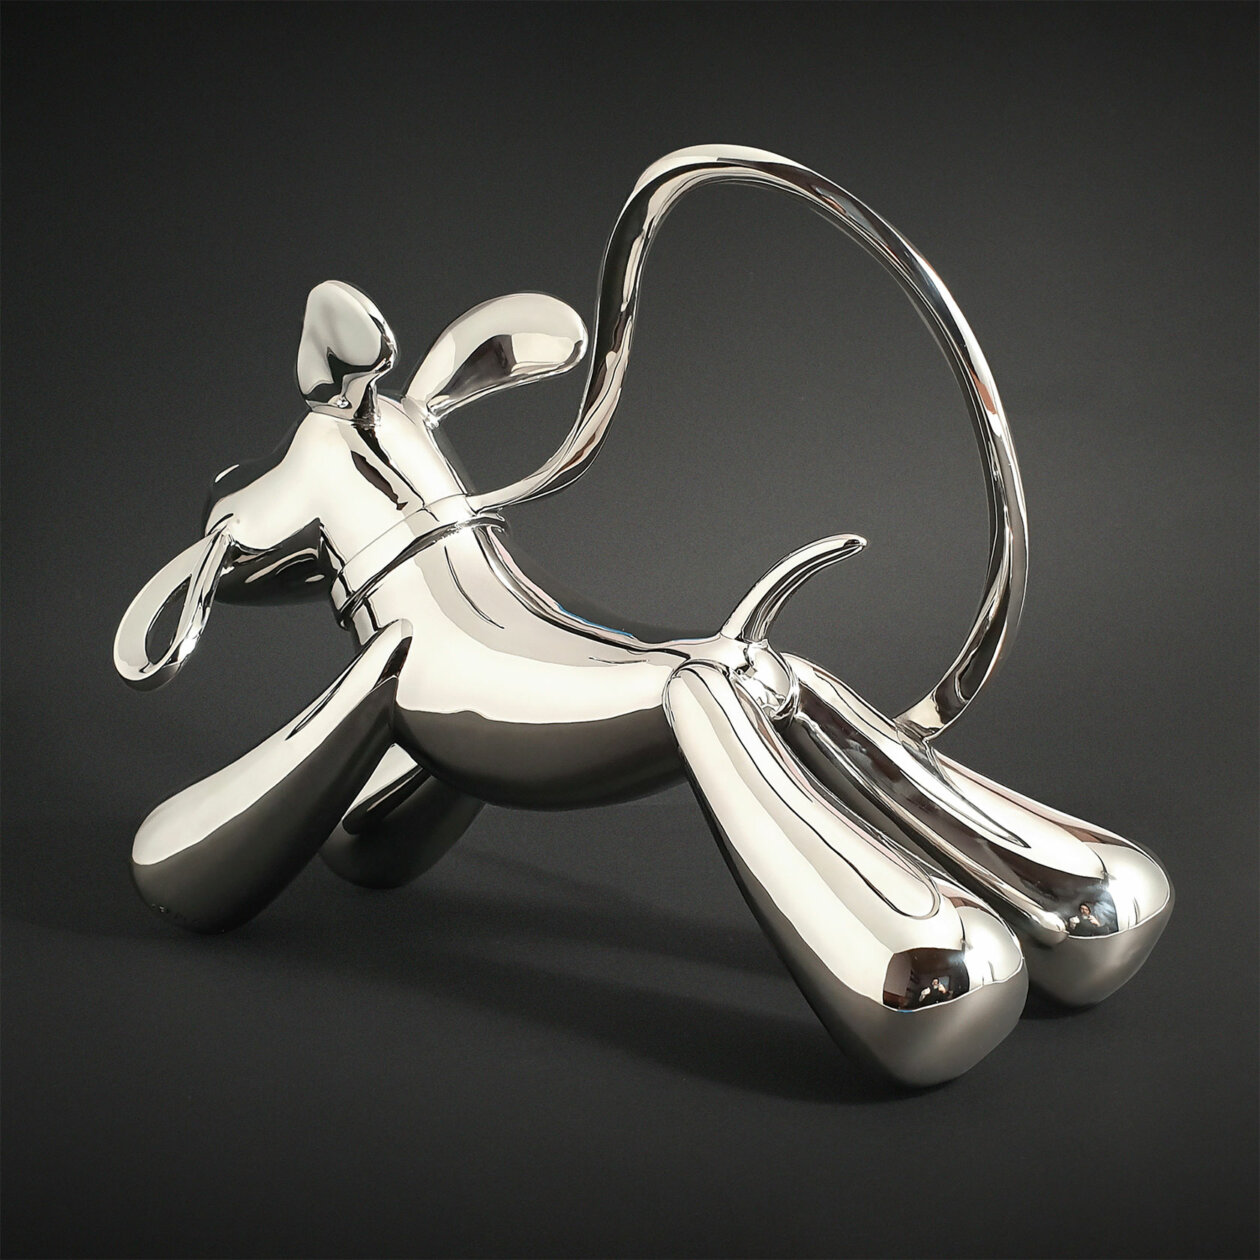 Fun Animal Polished Metal Sculptures By Ferdi B. Dick (17)